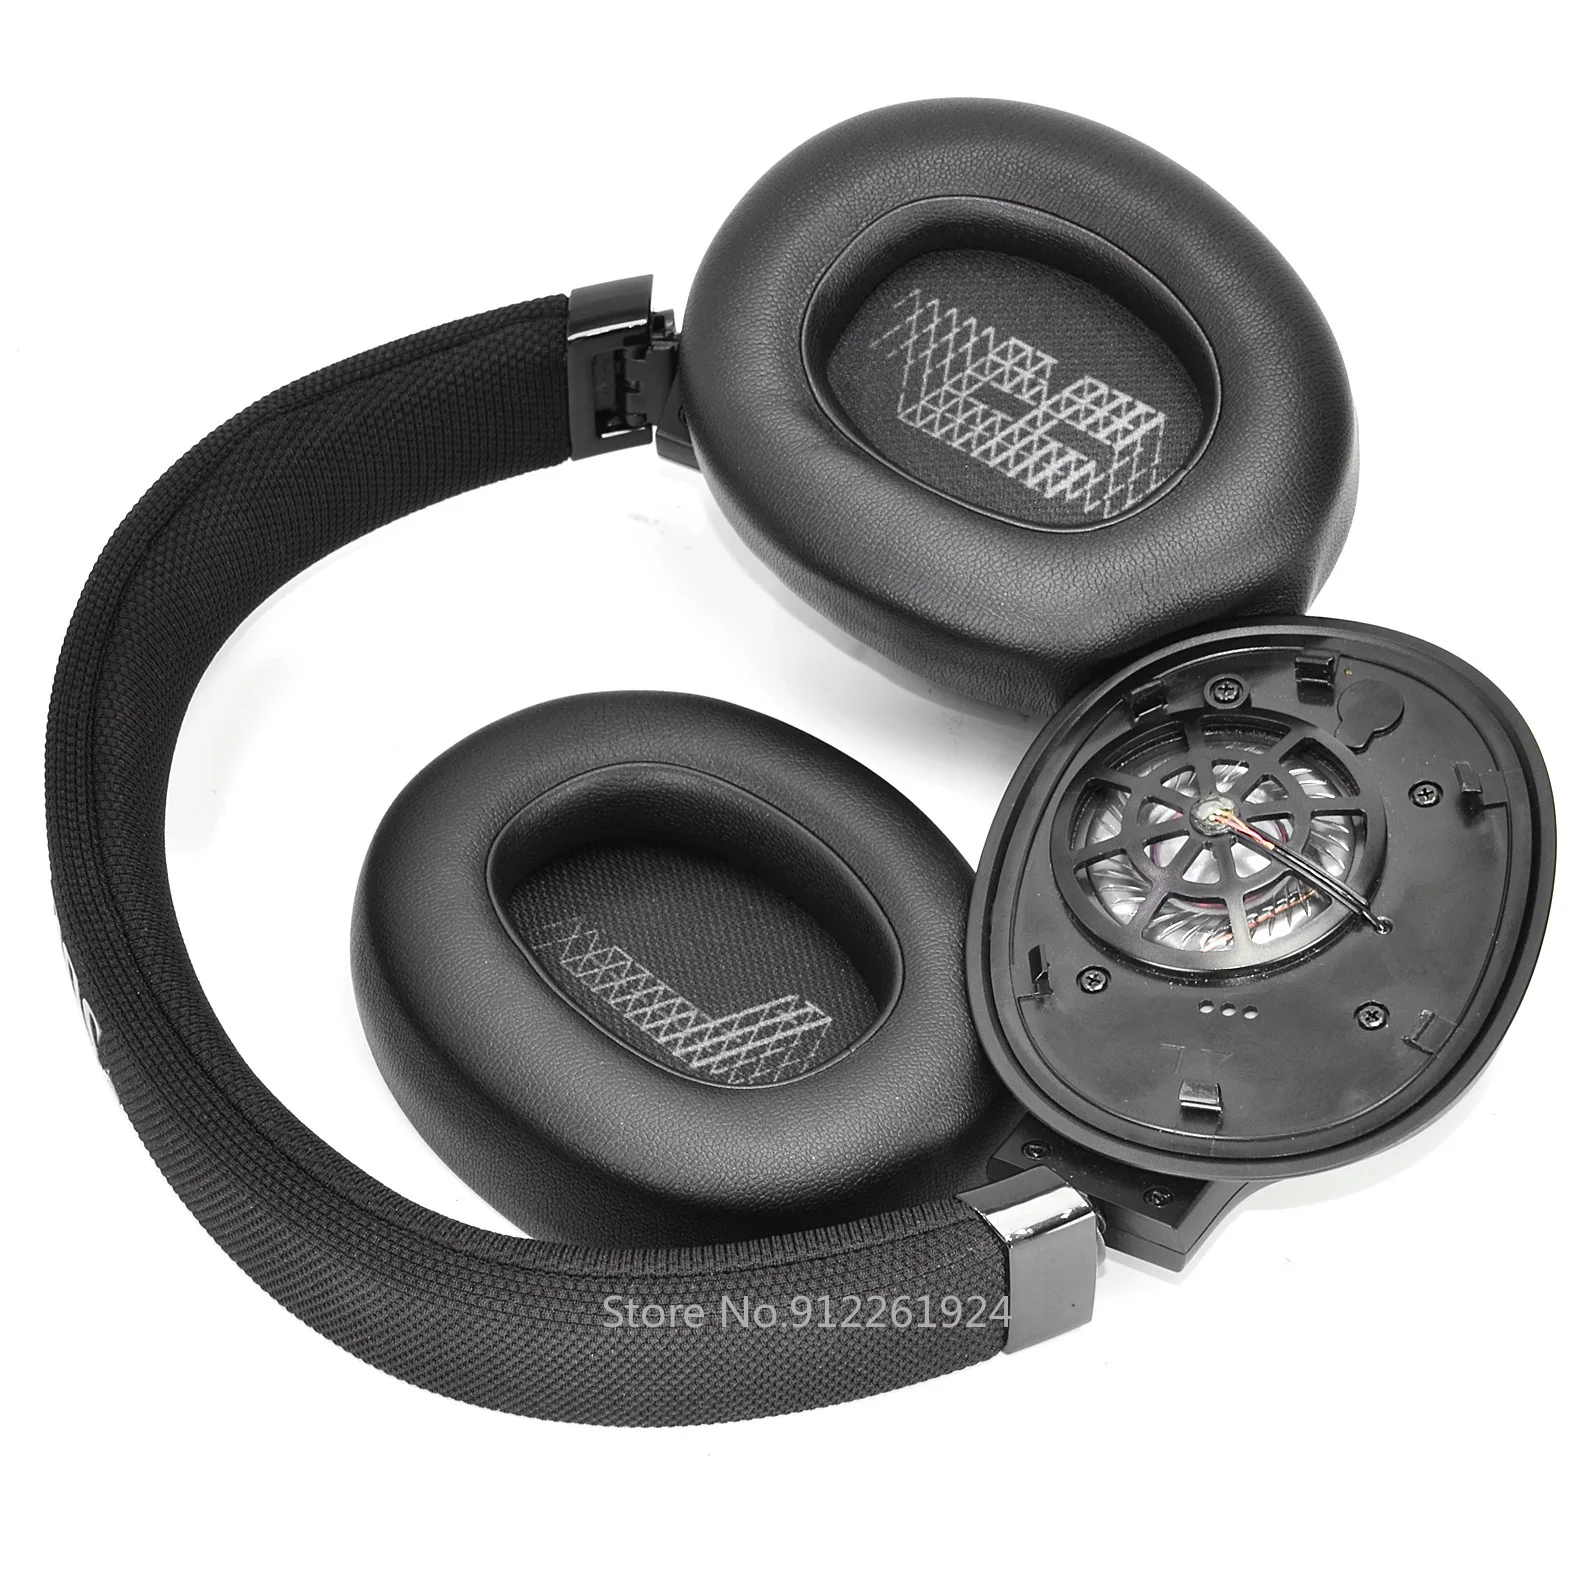 E65btnc Ear Pad Cushion | Ear Pads Jbl | Амбушюры Для Jbl - Ear E65btnc - Aliexpress